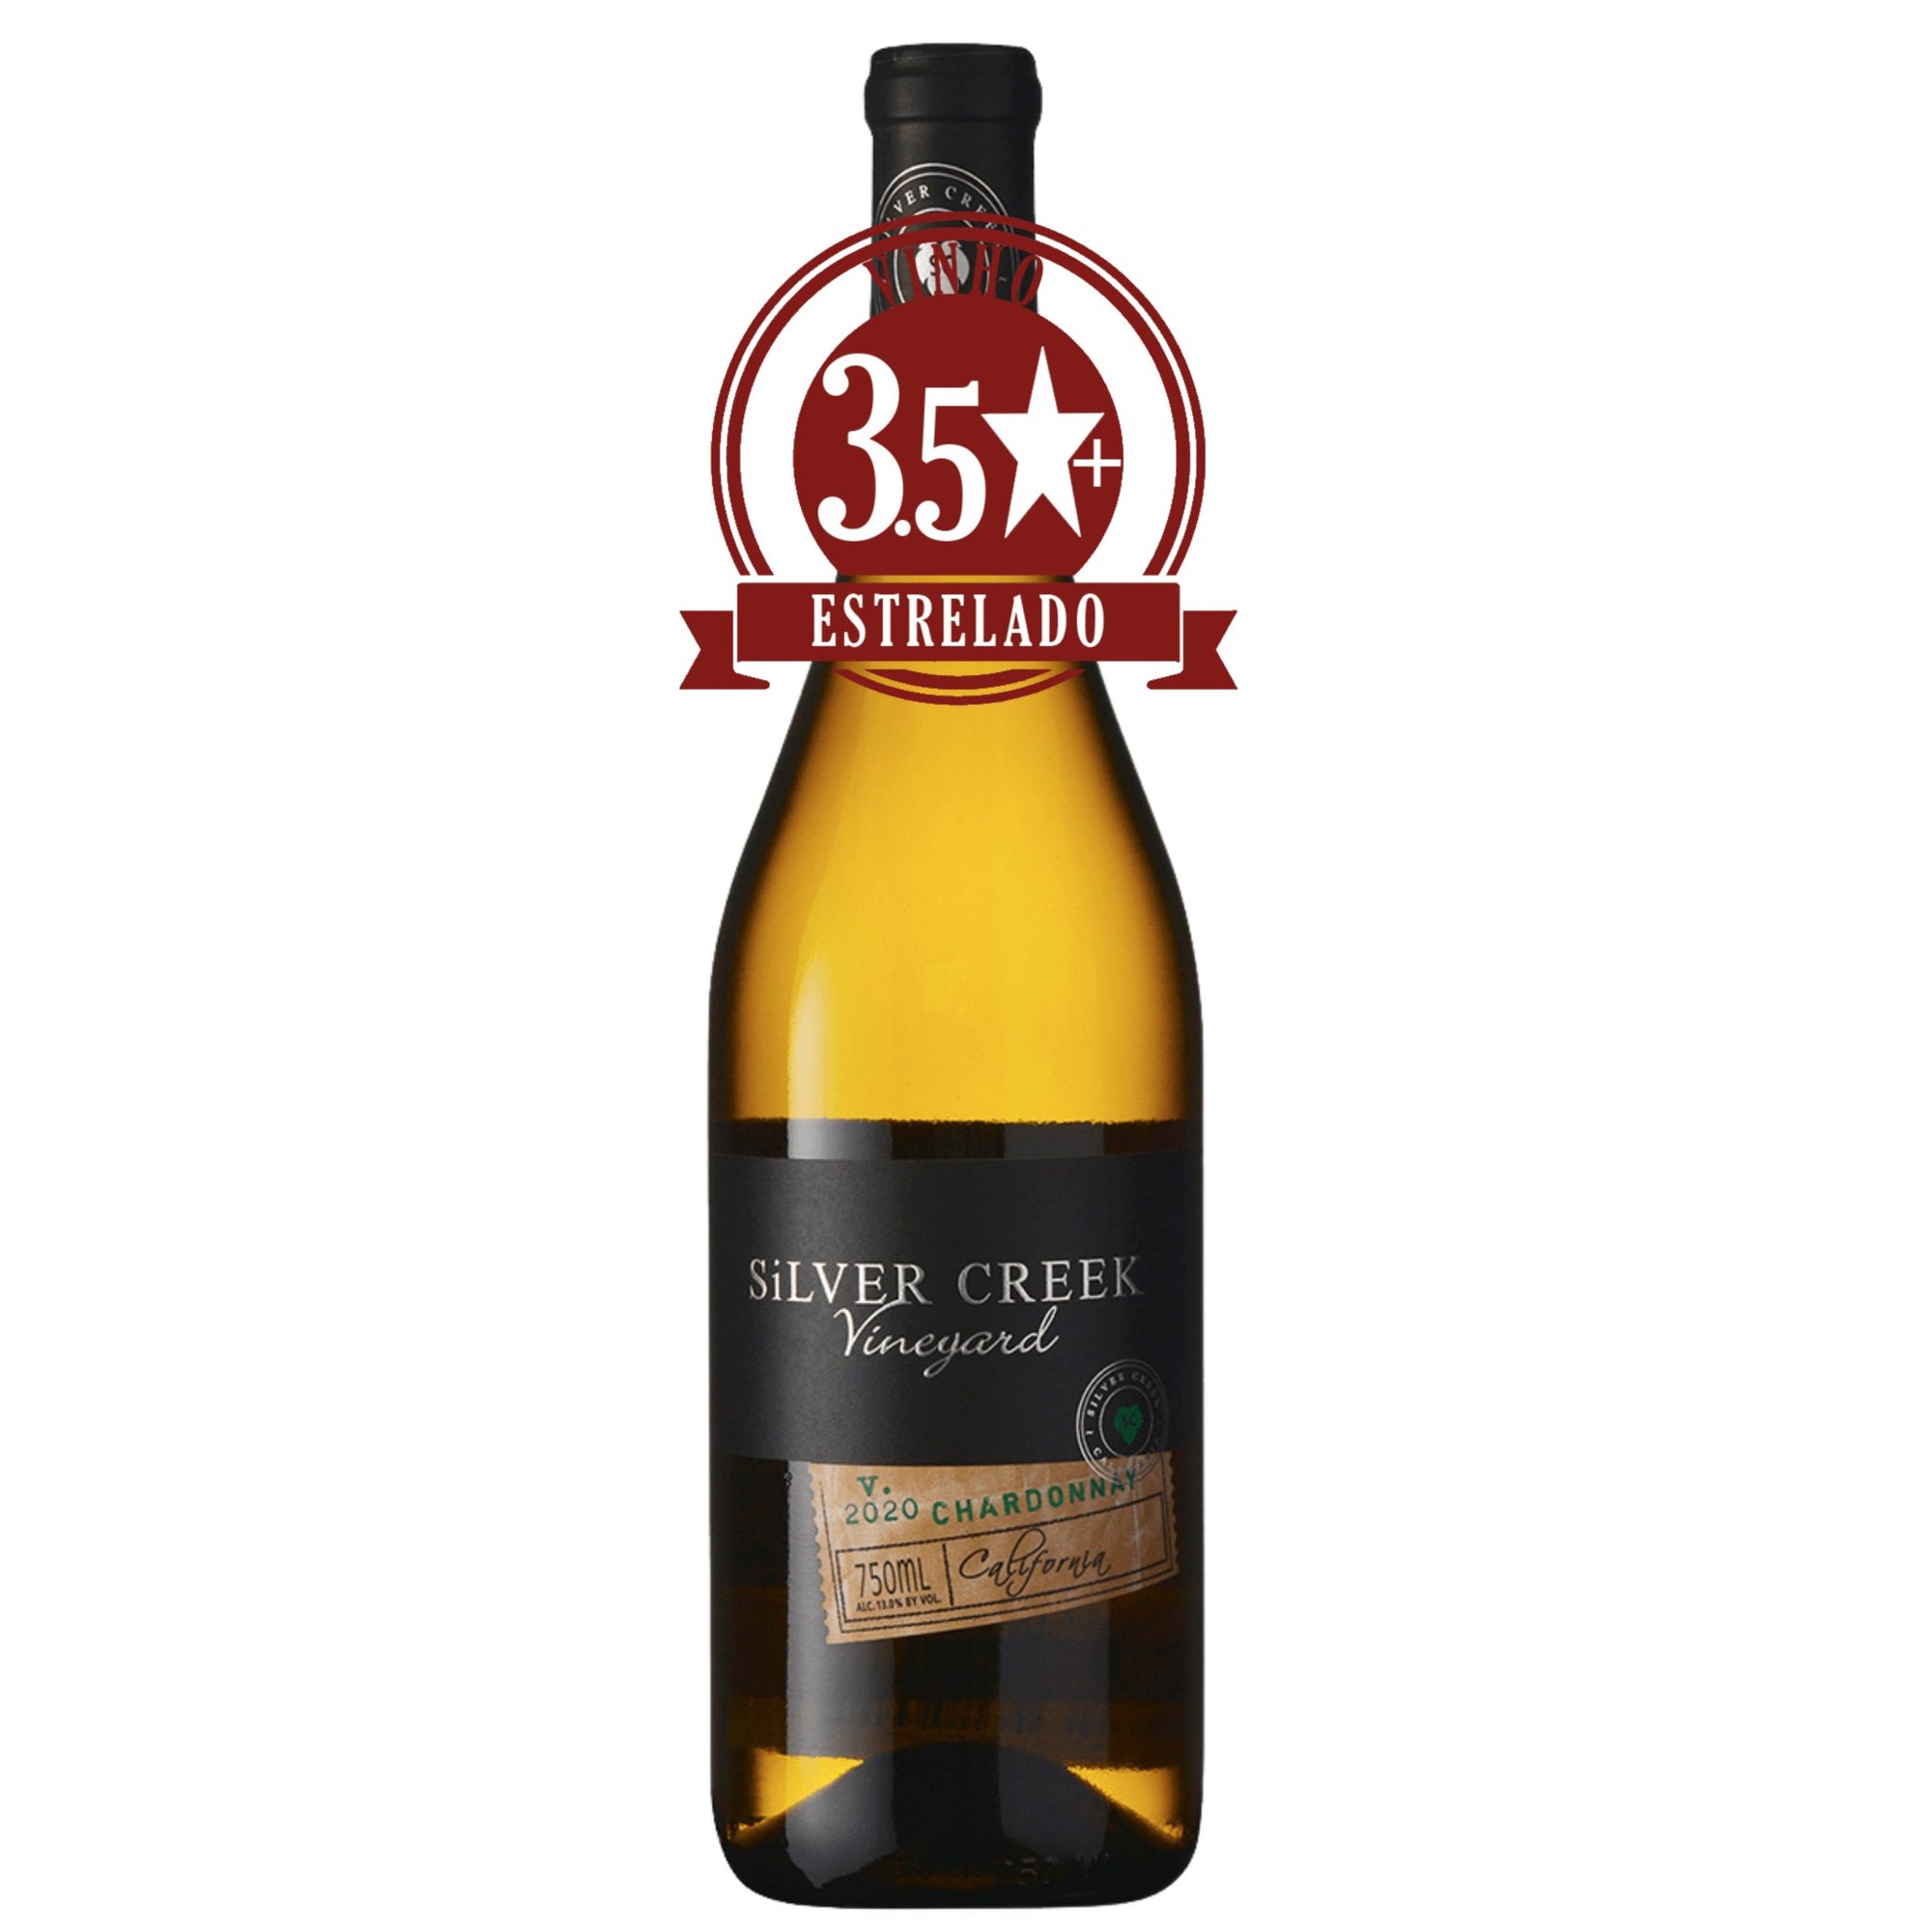 Silver Creek Chardonnay, California 2020 - SmartBuyWines.com.br